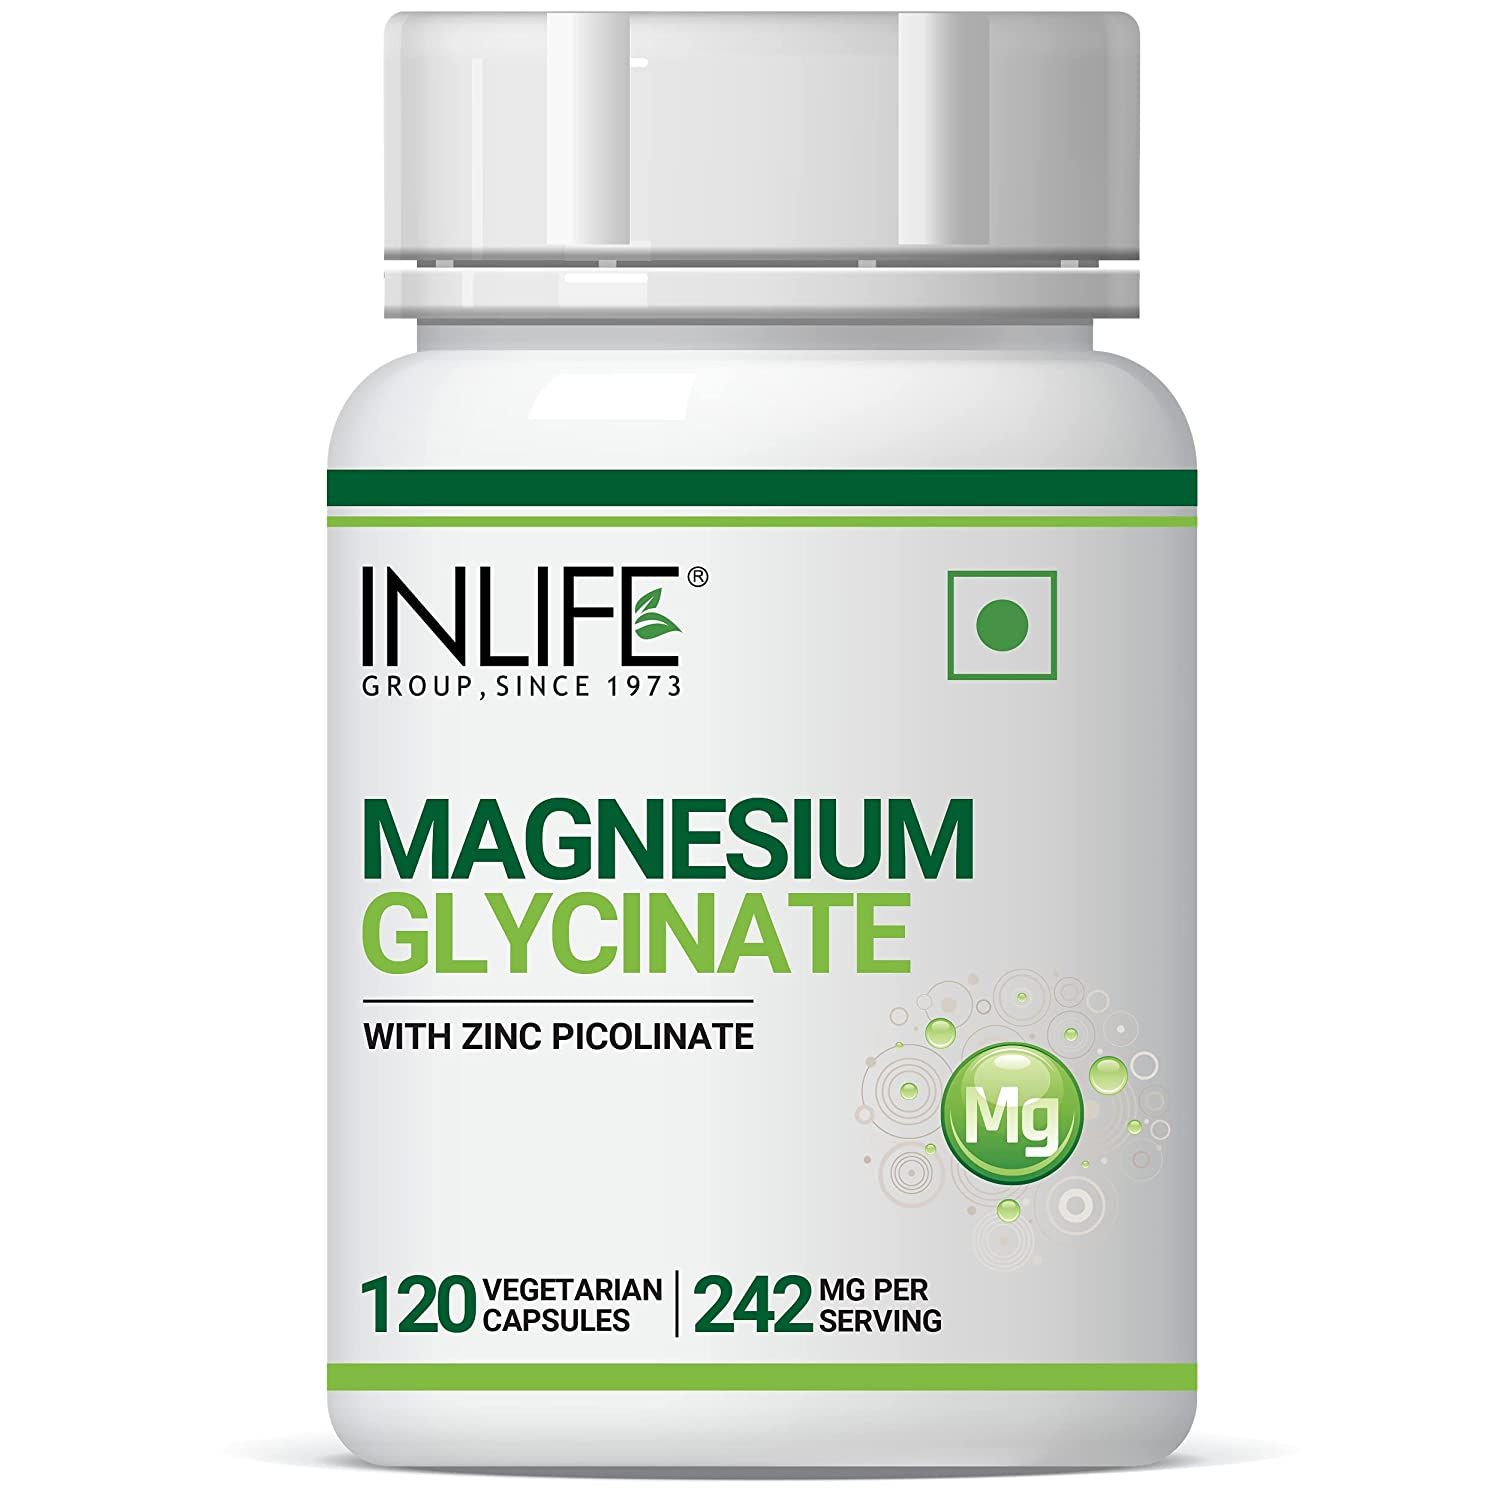 Inlife Magnesium Glycinate Image